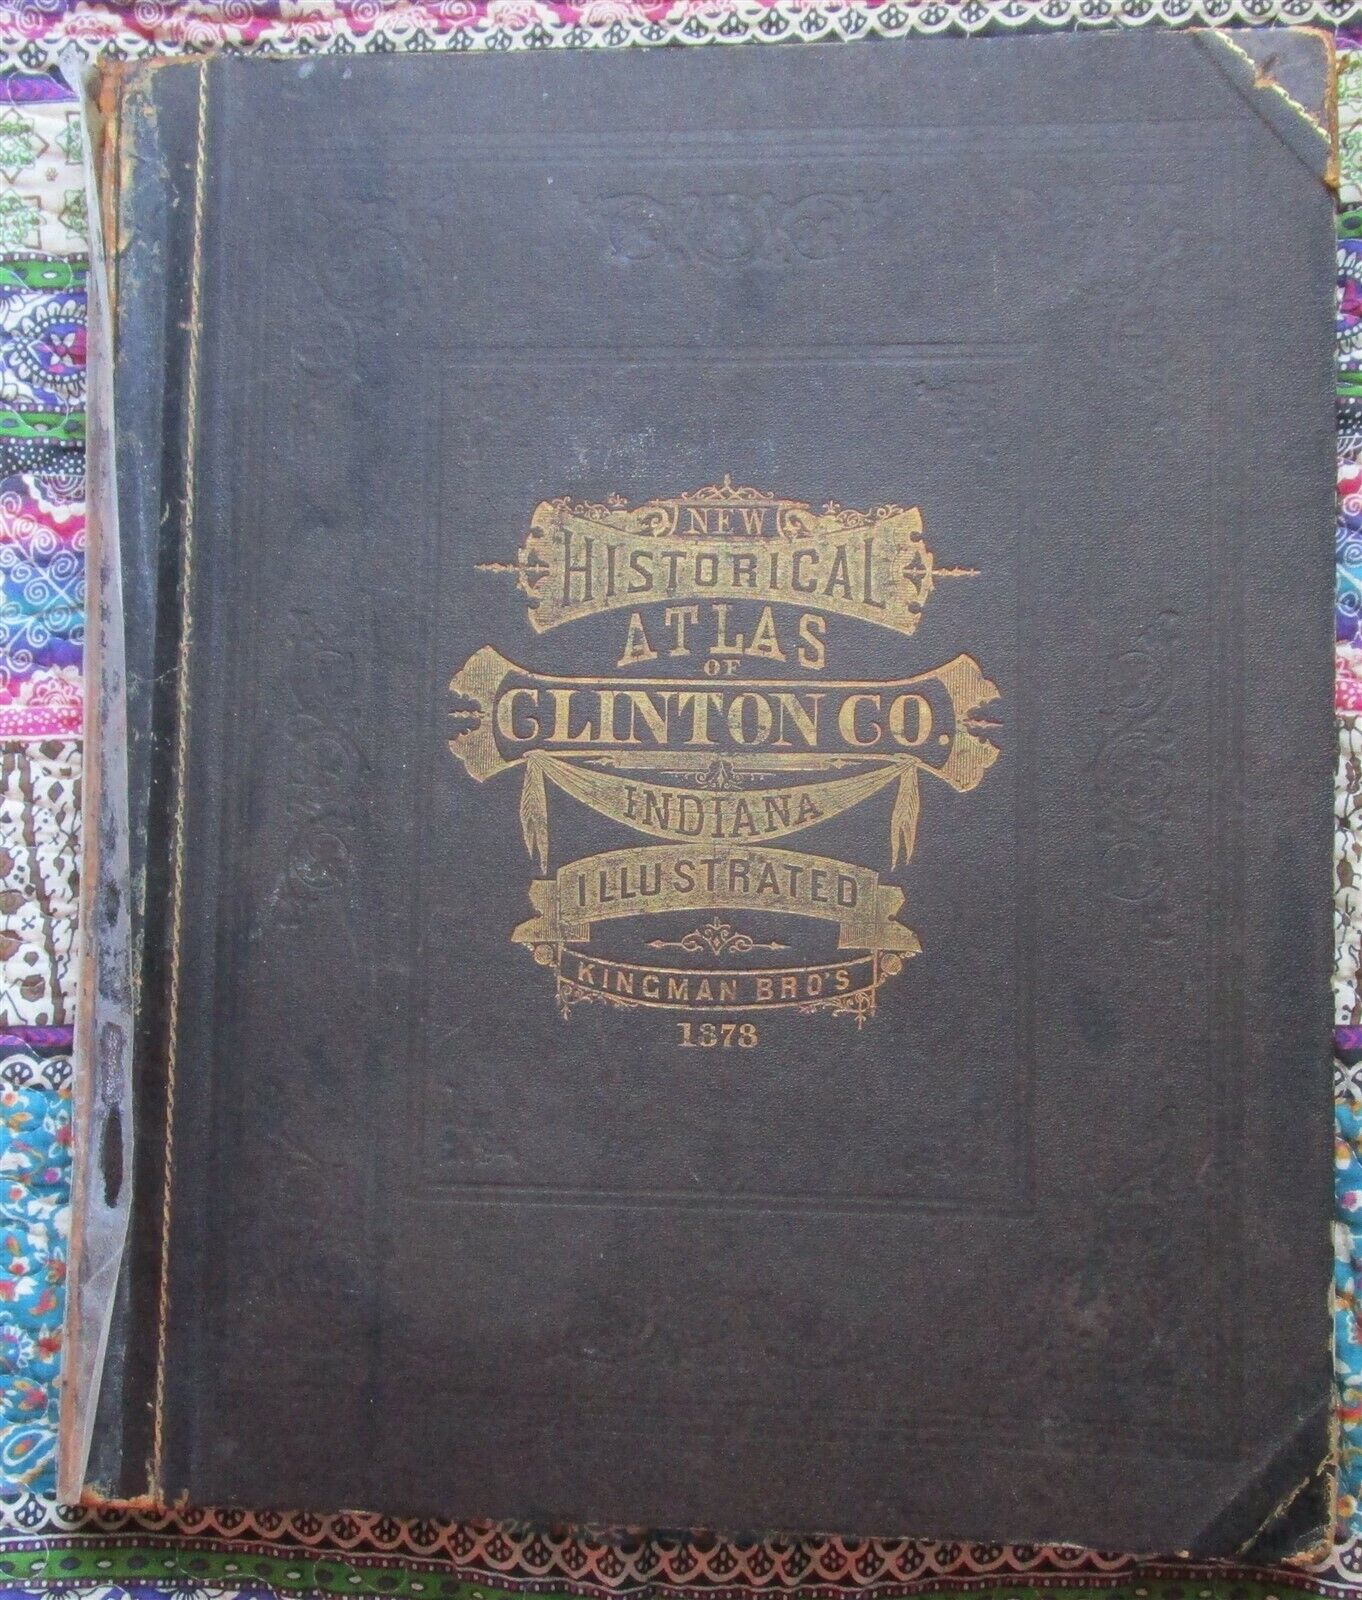 1878 illustrated Kingman Brothers combination atlas of Clinton County, Indiana